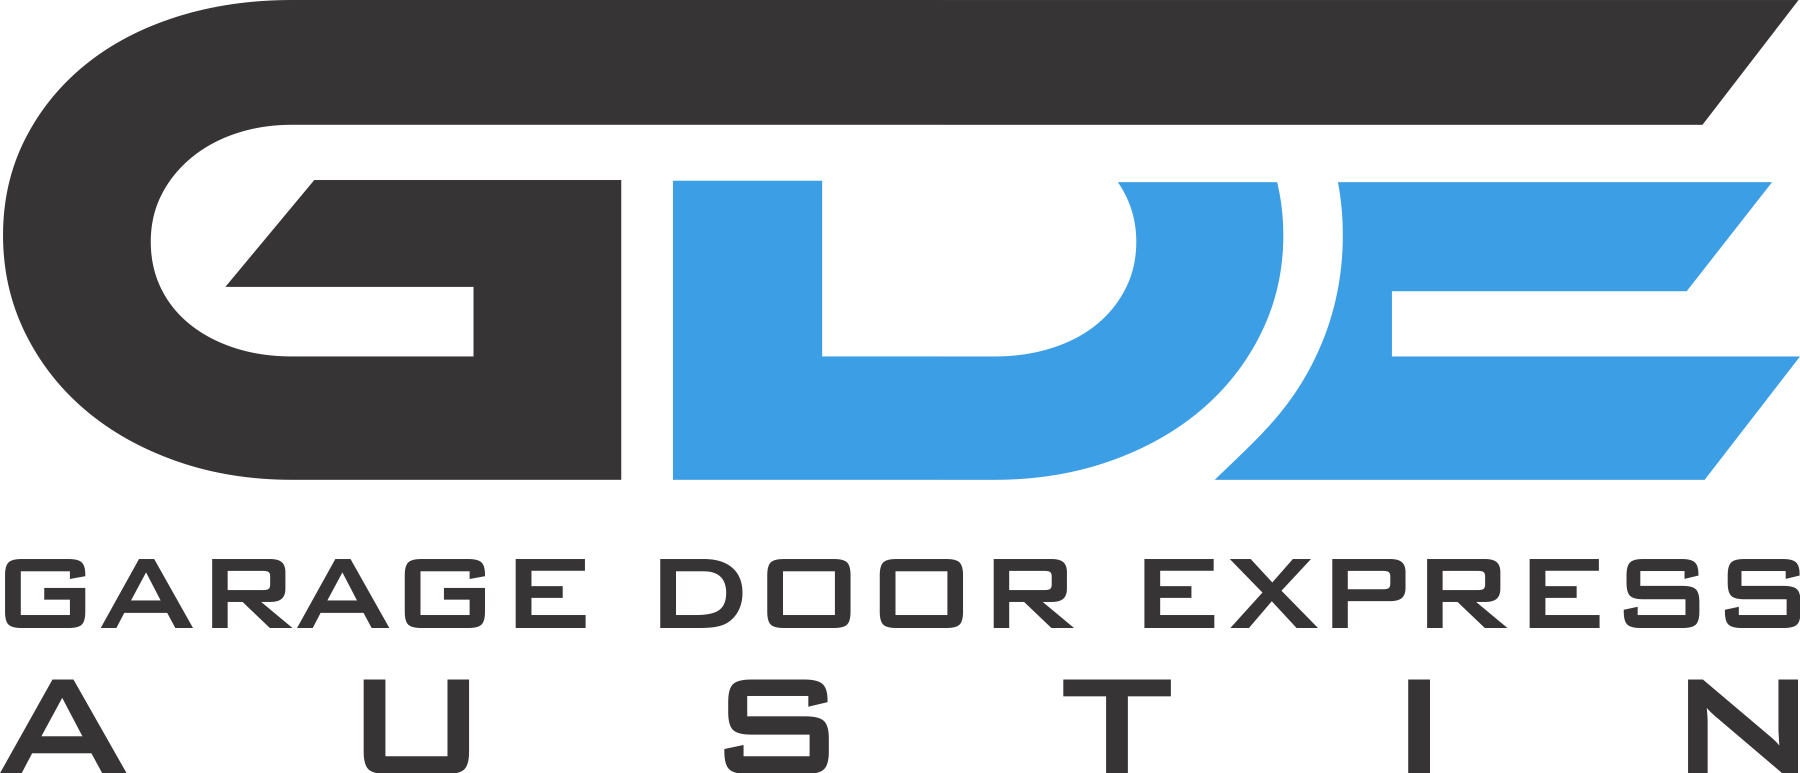 Garage Door Express - Austin